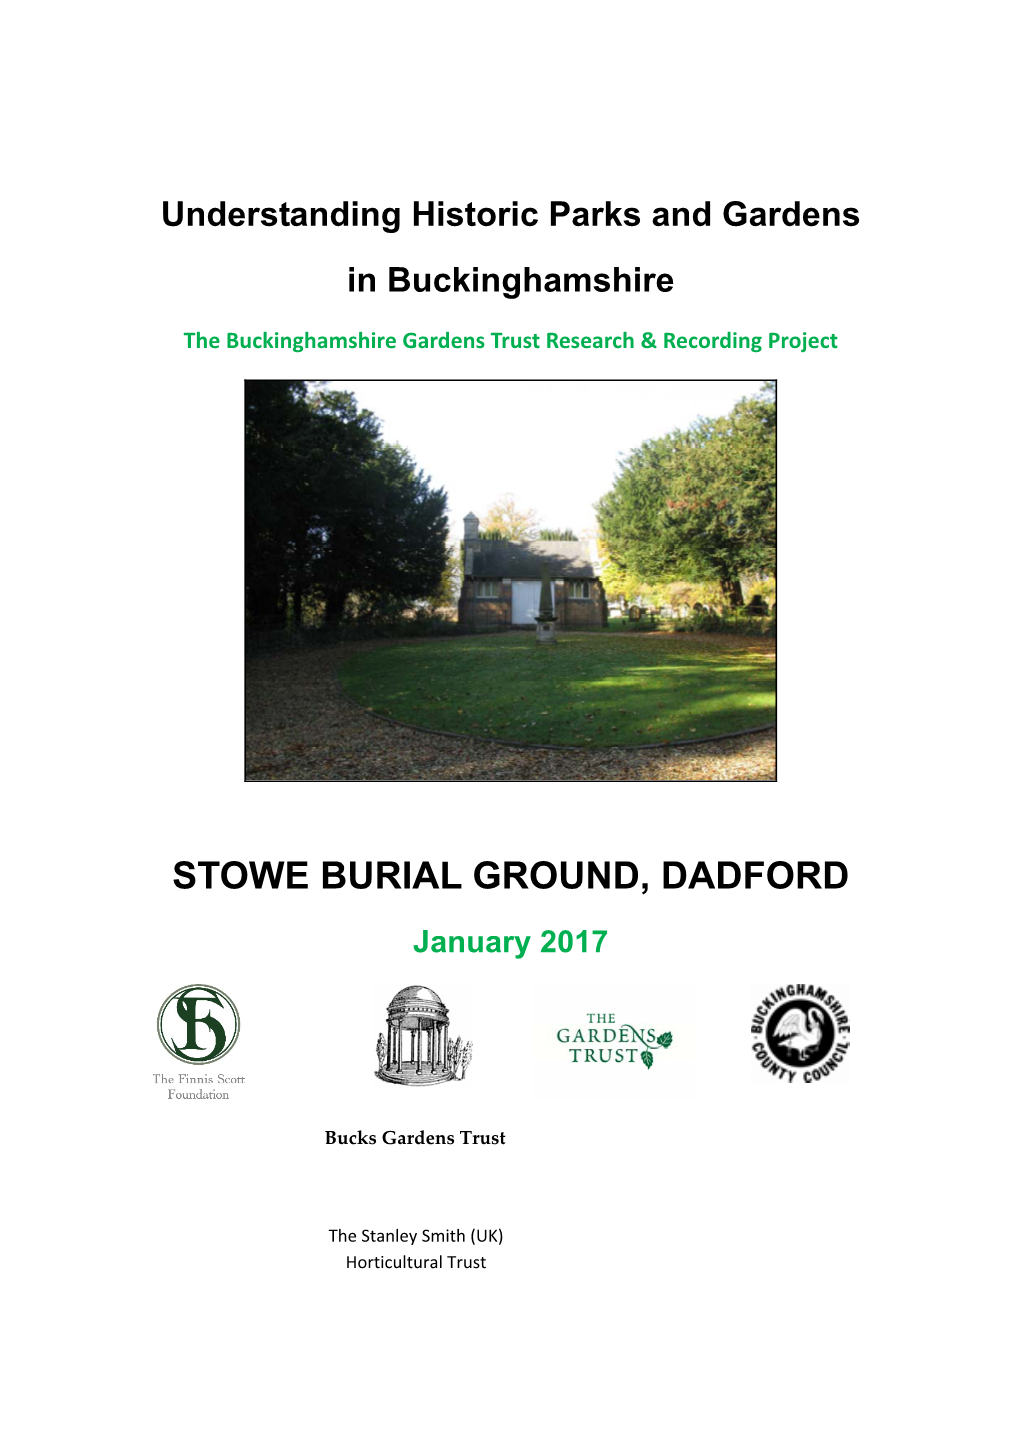 Stowe Burial Ground, Dadford